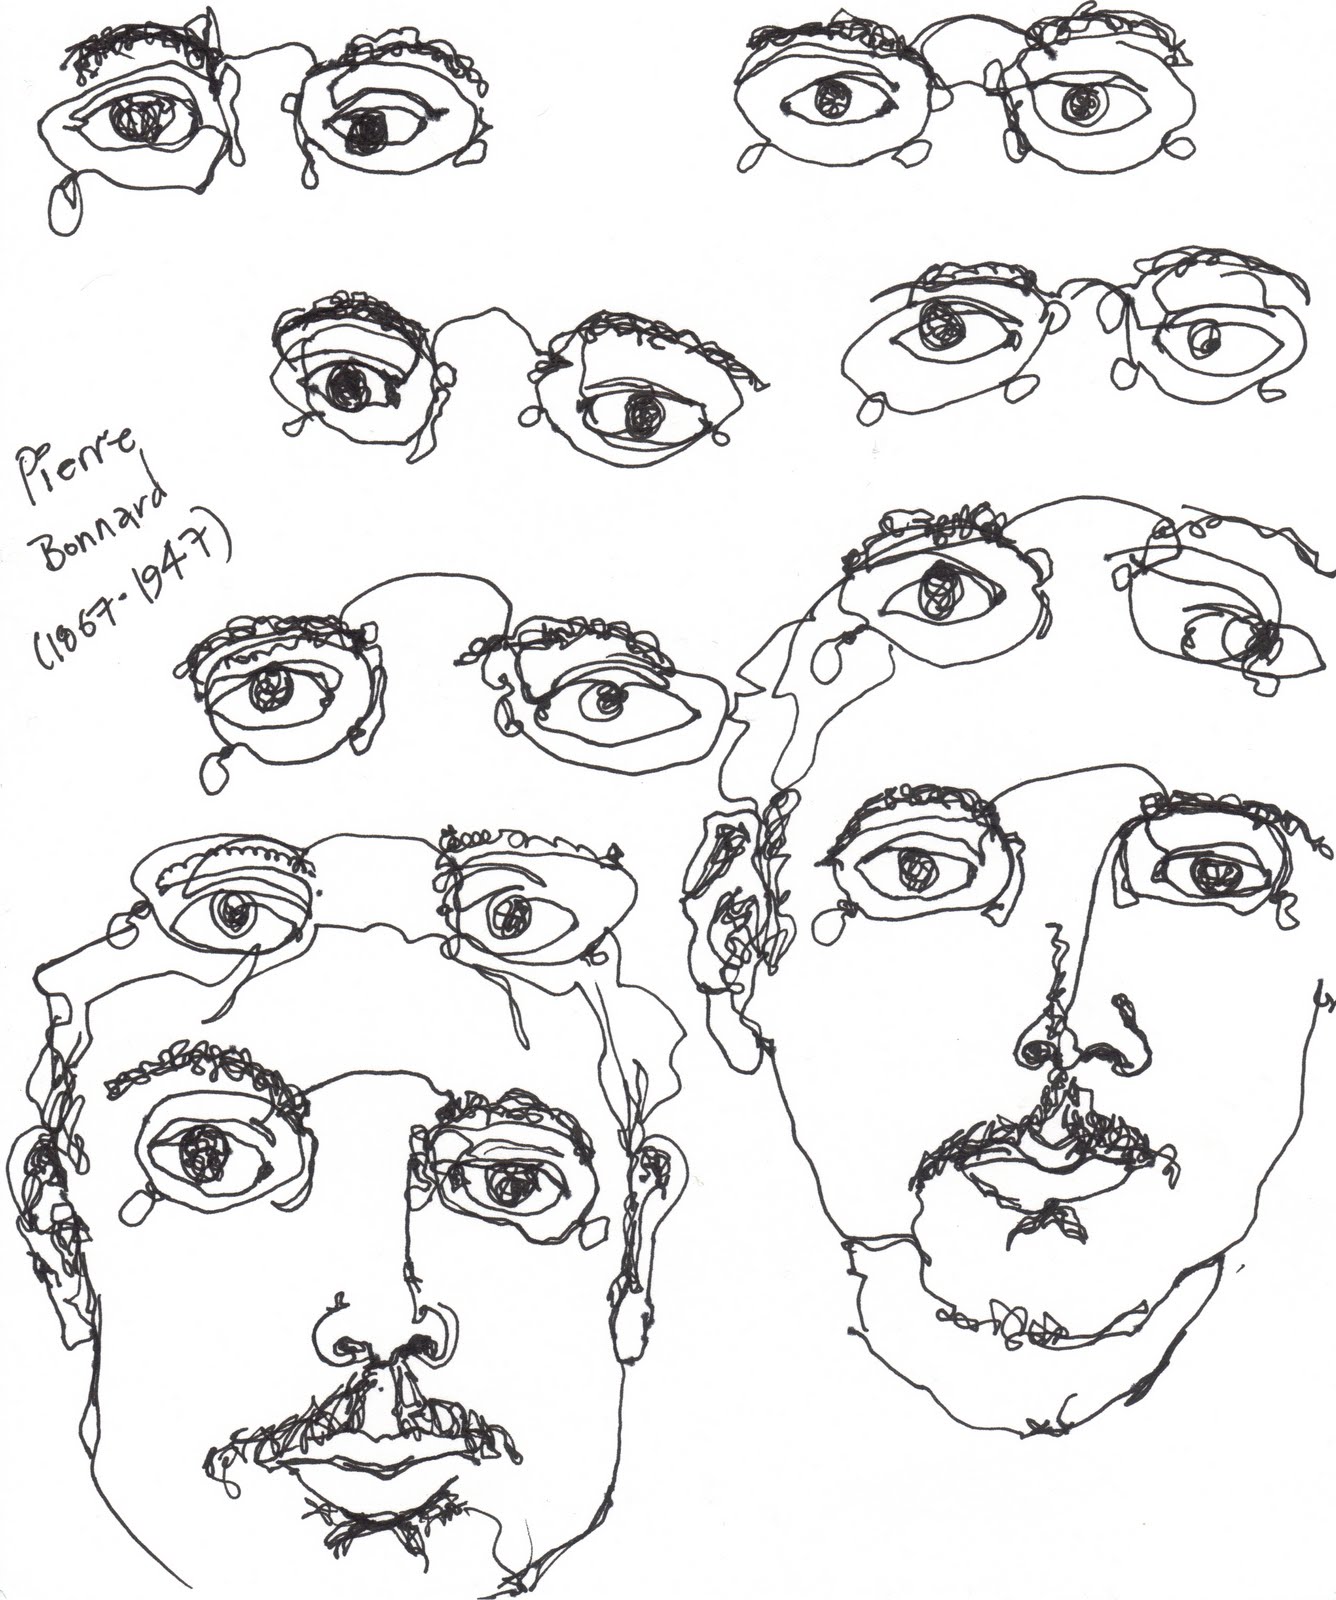 Draw mean. Blind Contour drawing. Contour drawing. Закрывает глаза от света рисунок от первого лица. Drawing means.